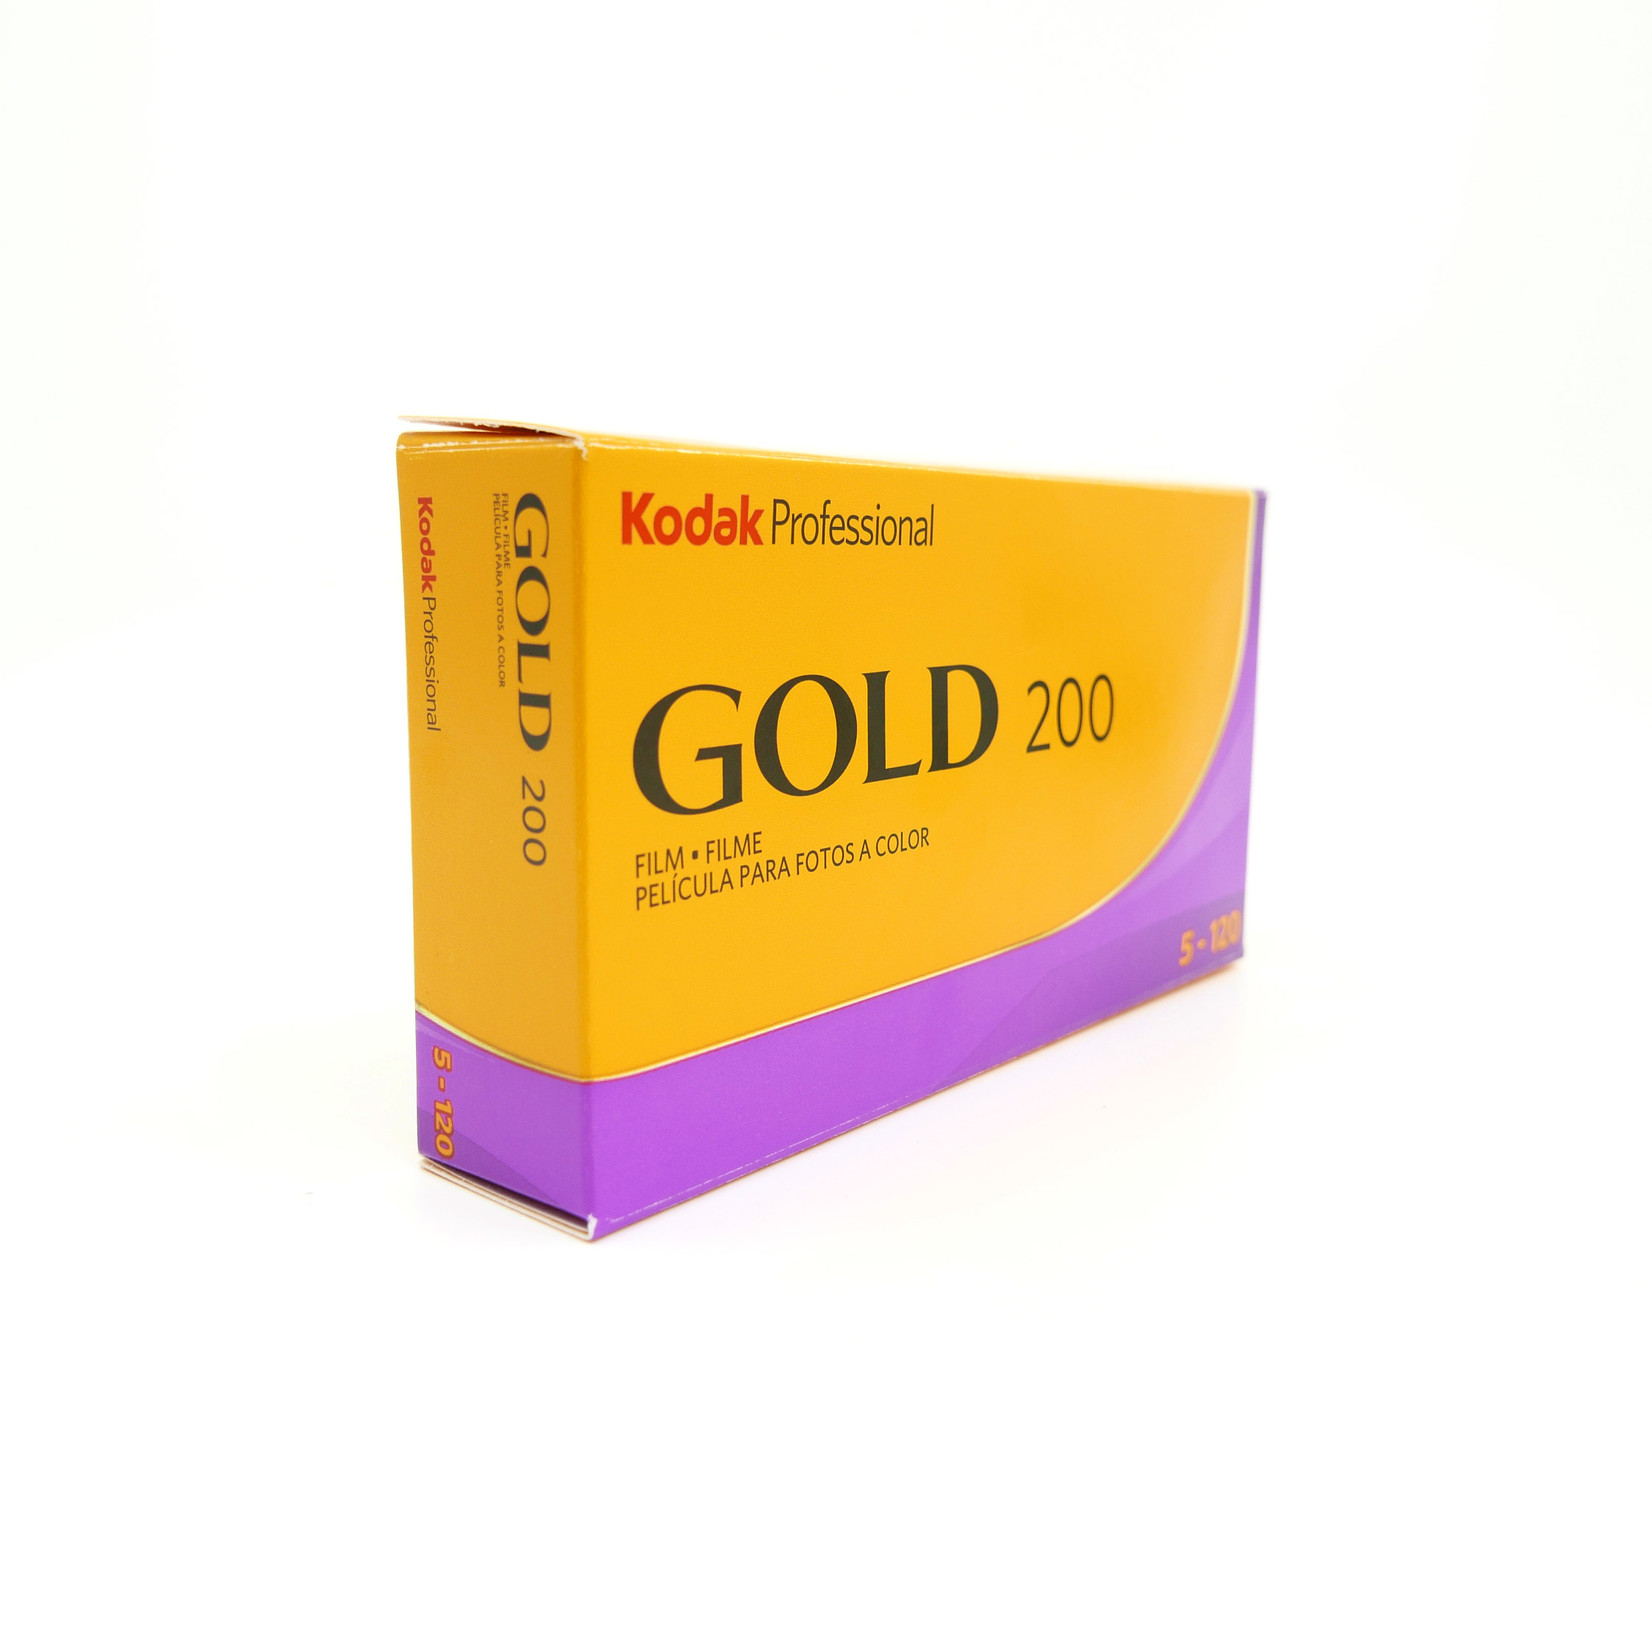 Kodak Kodak Professional Gold 200 120